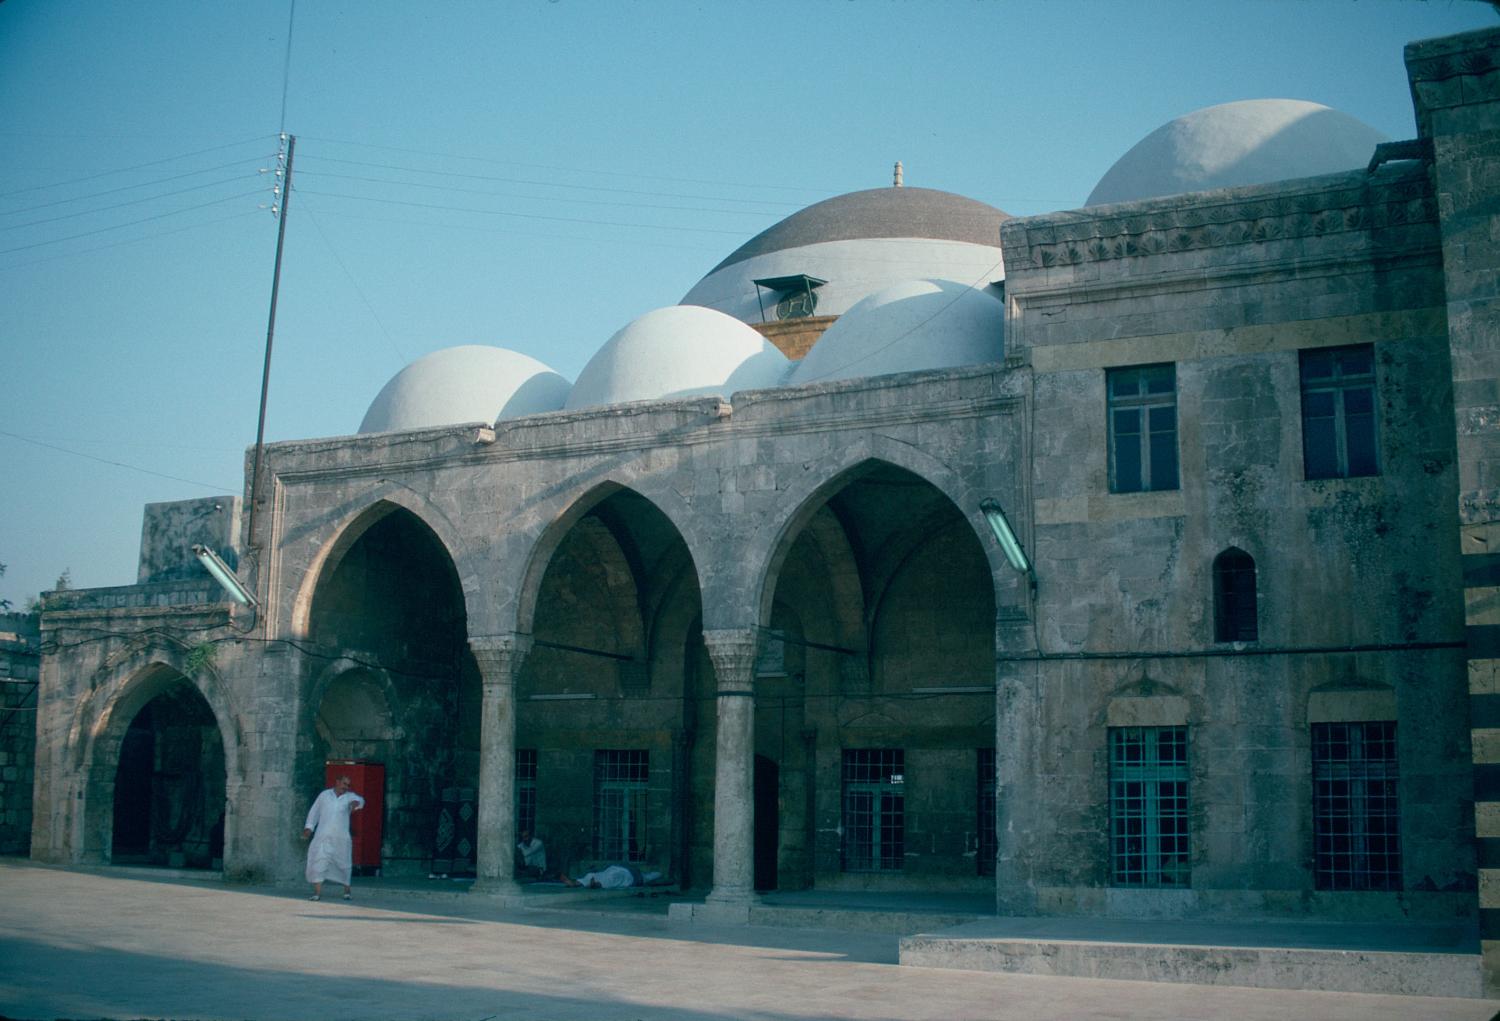 Exterior view of mosque portico